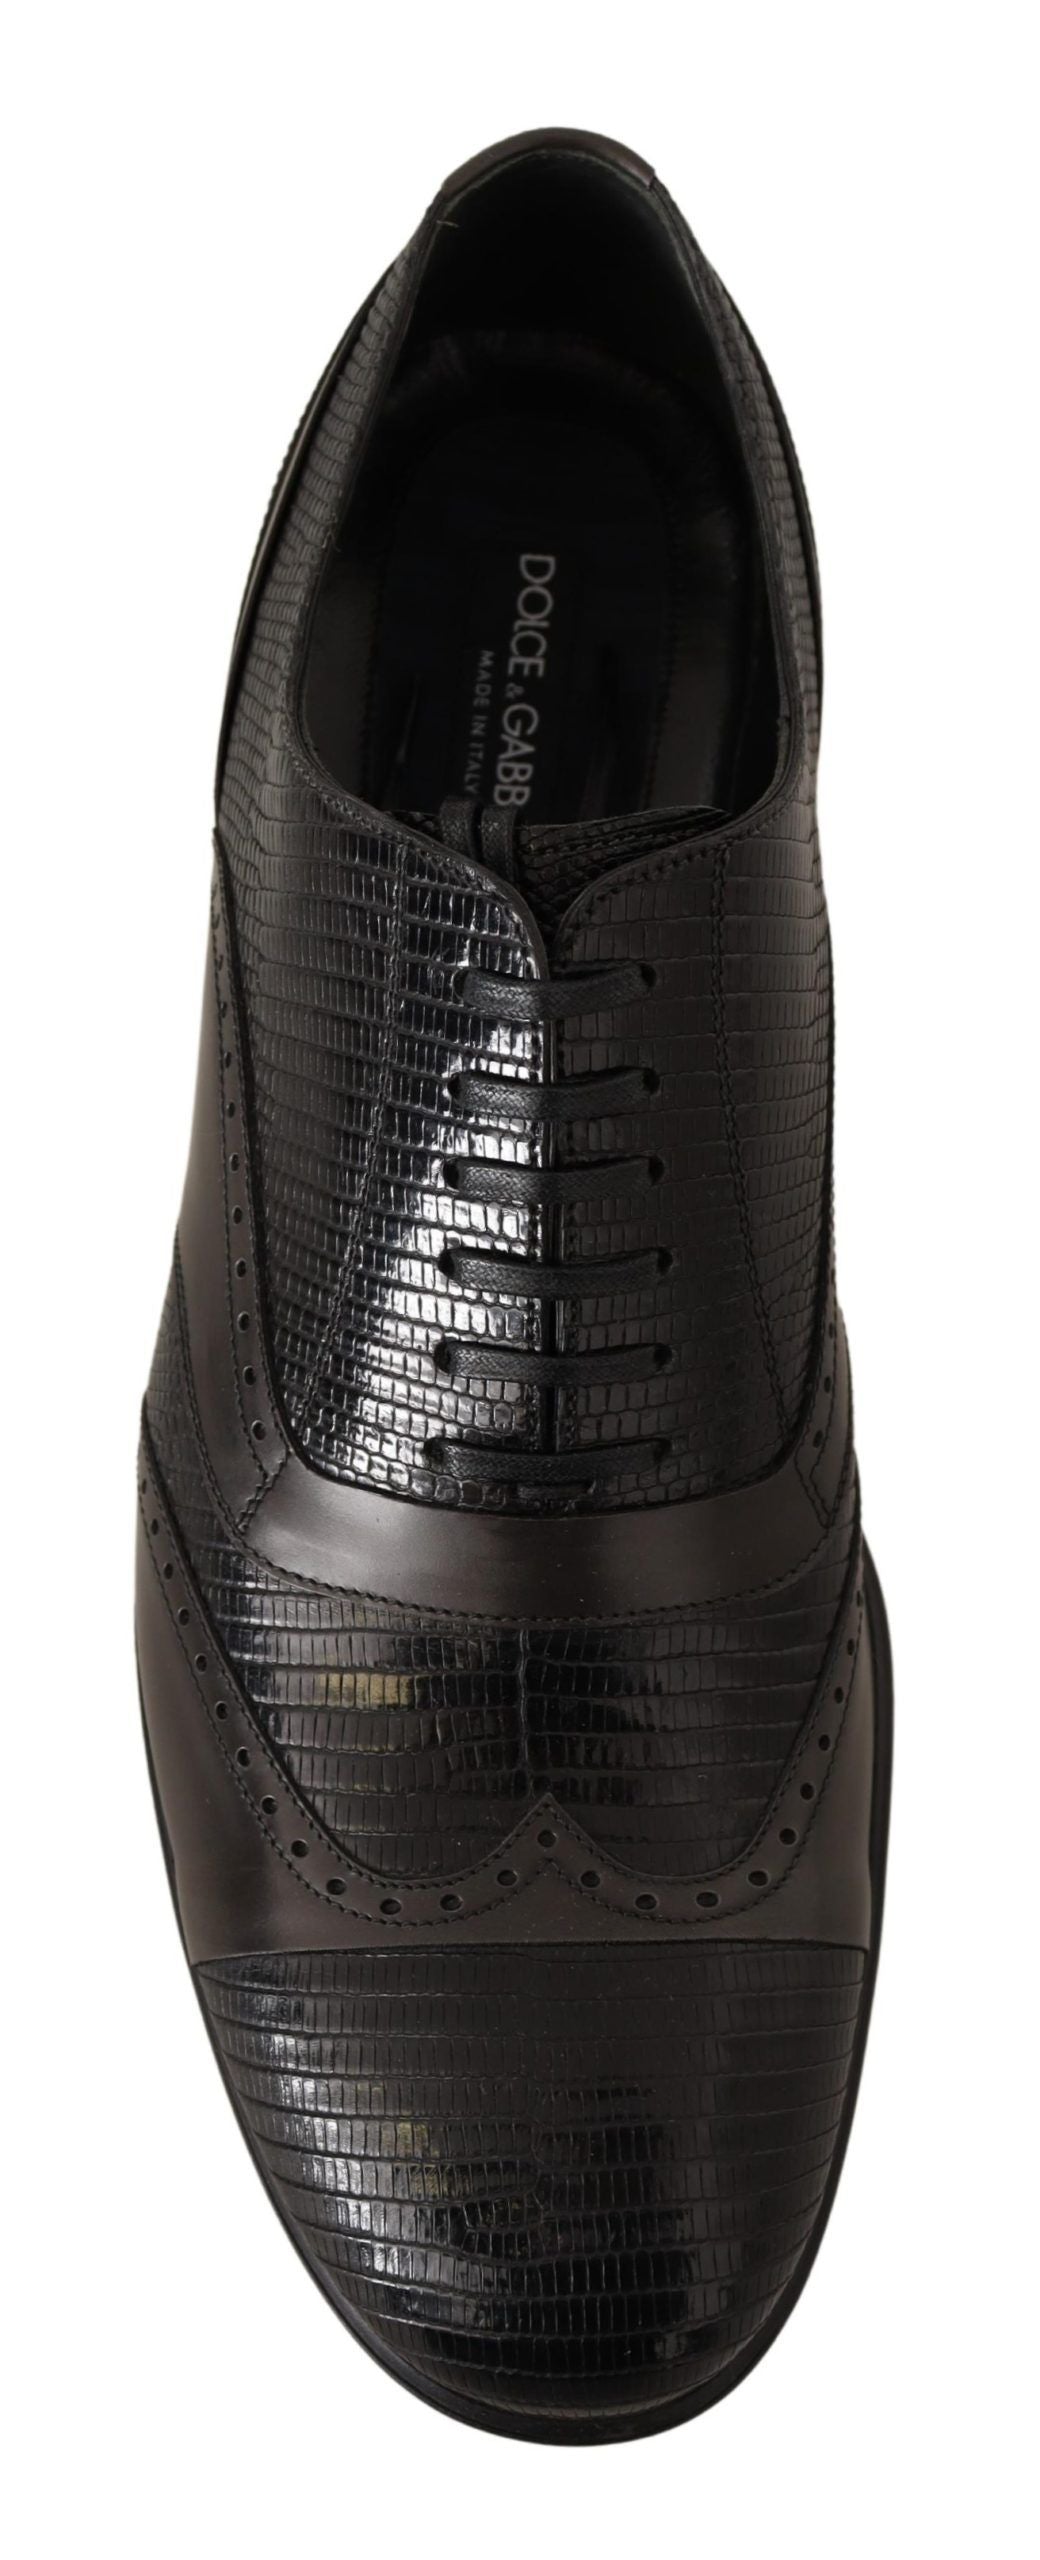 Dolce & Gabbana Brown Lizard Skin Leather Oxford Dress Shoes